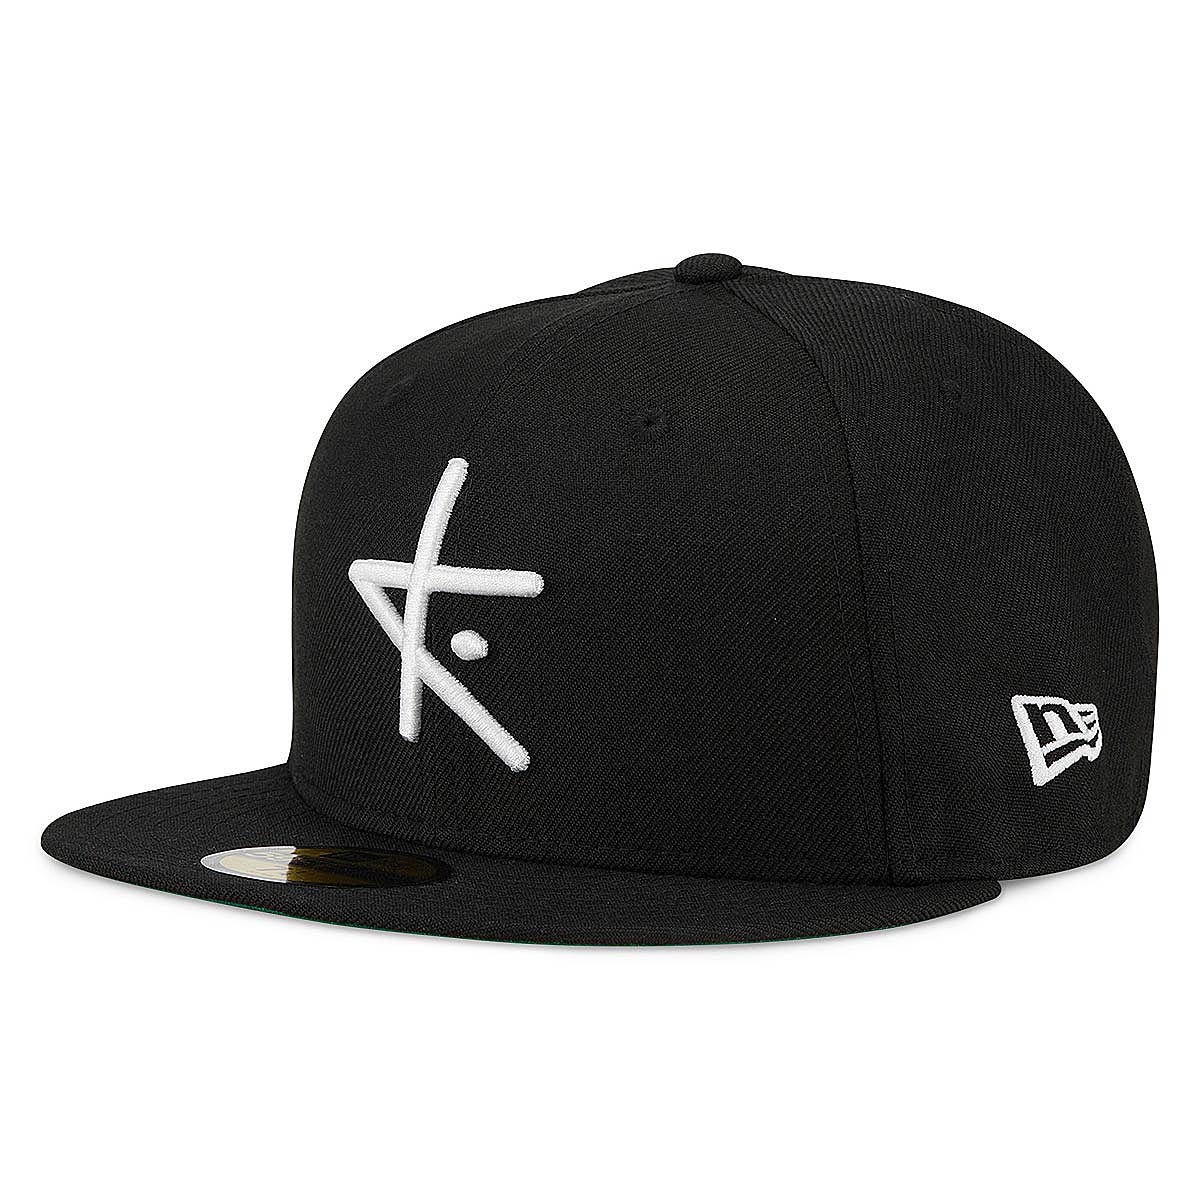 Image of New Era X Kickz 1993 59fifty Cap, Black